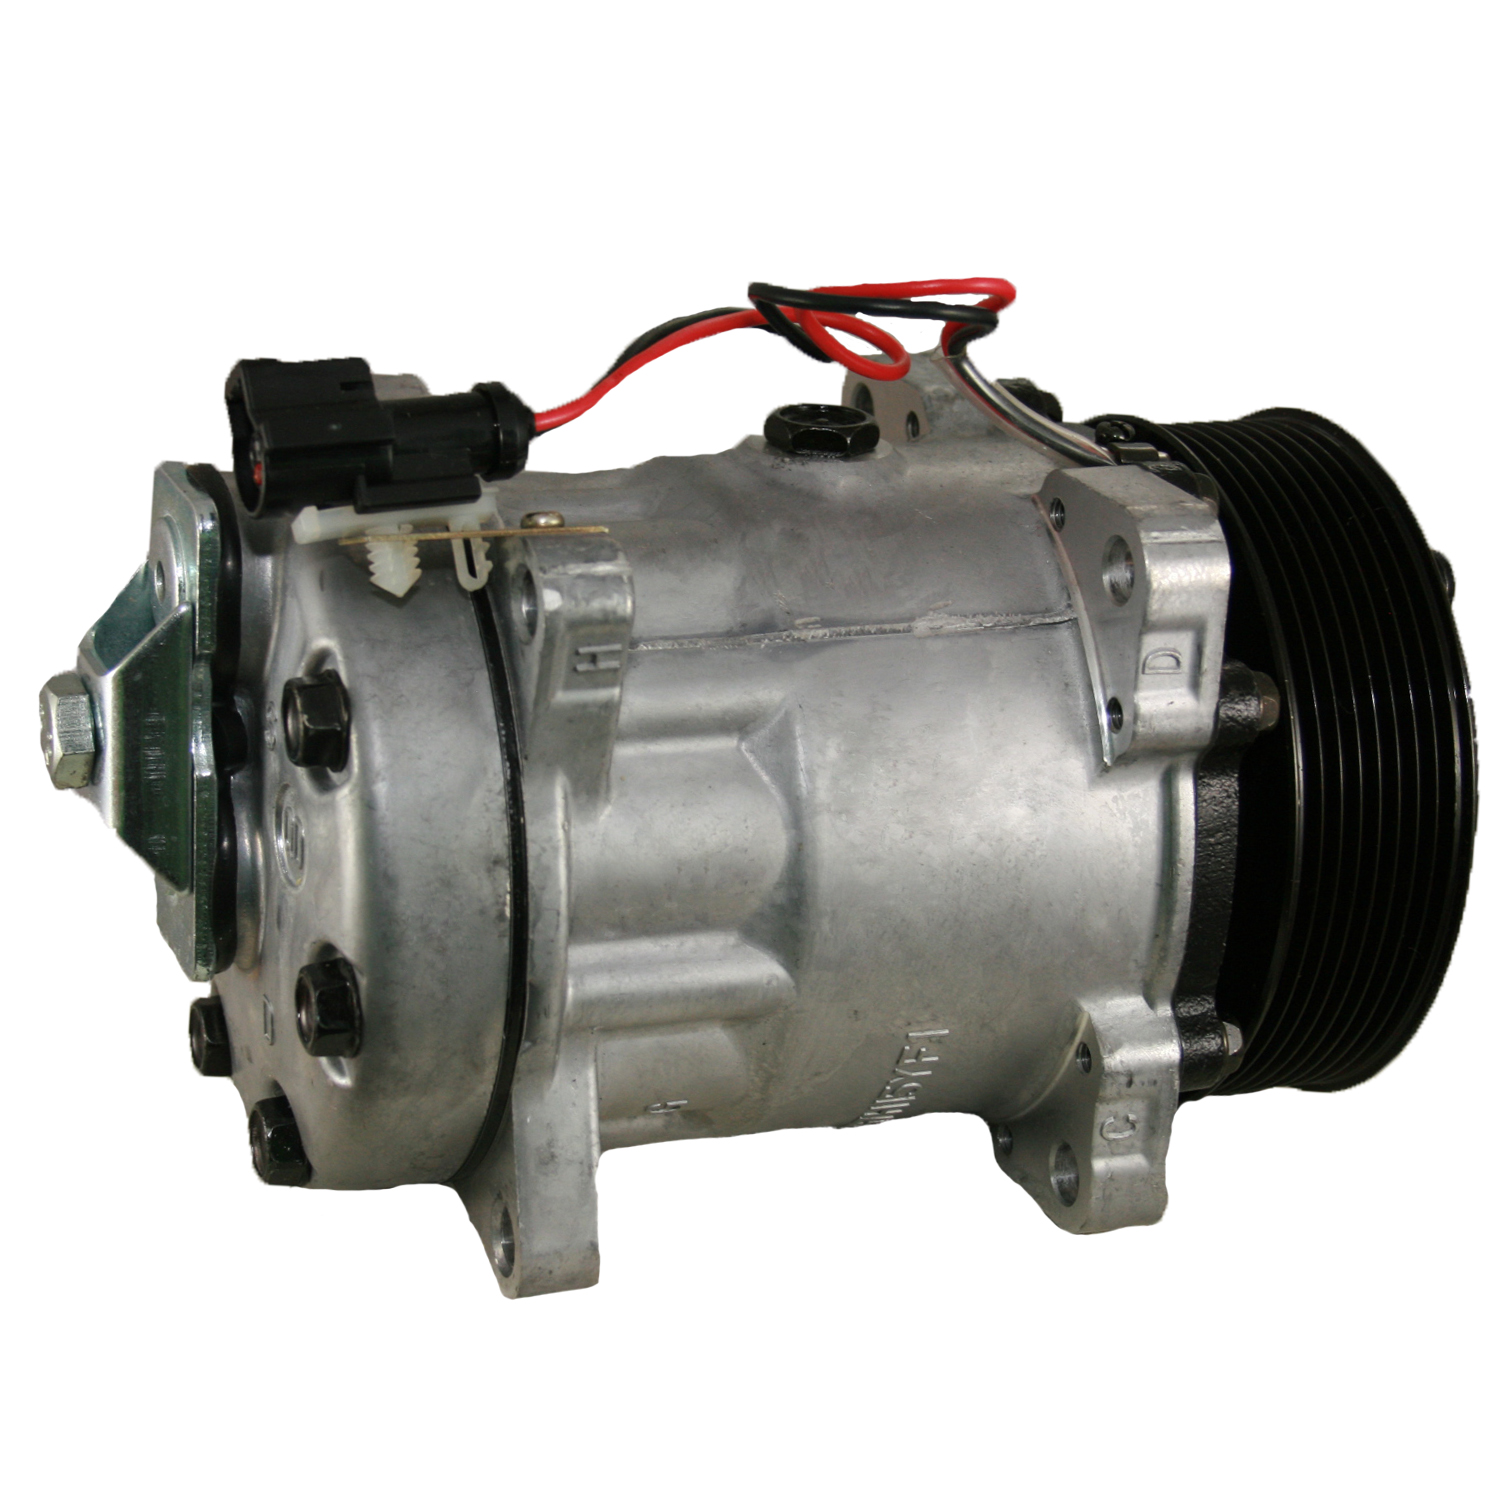 TCW Compressor 40579.801NEW New Product Image field_60b6a13a6e67c